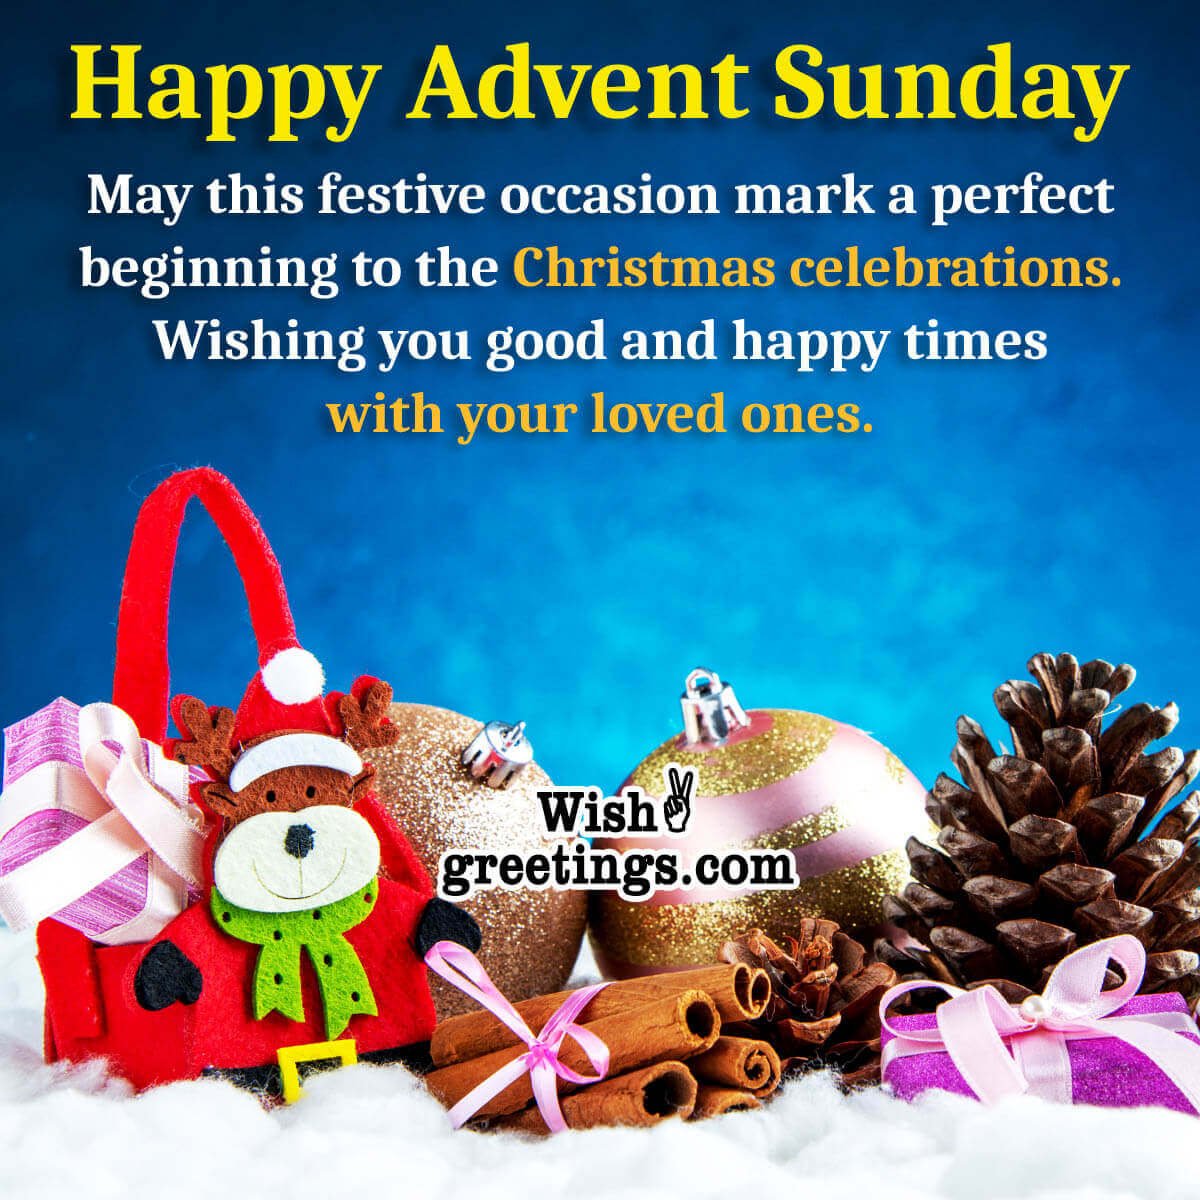 Happy Advent Sunday Message Image